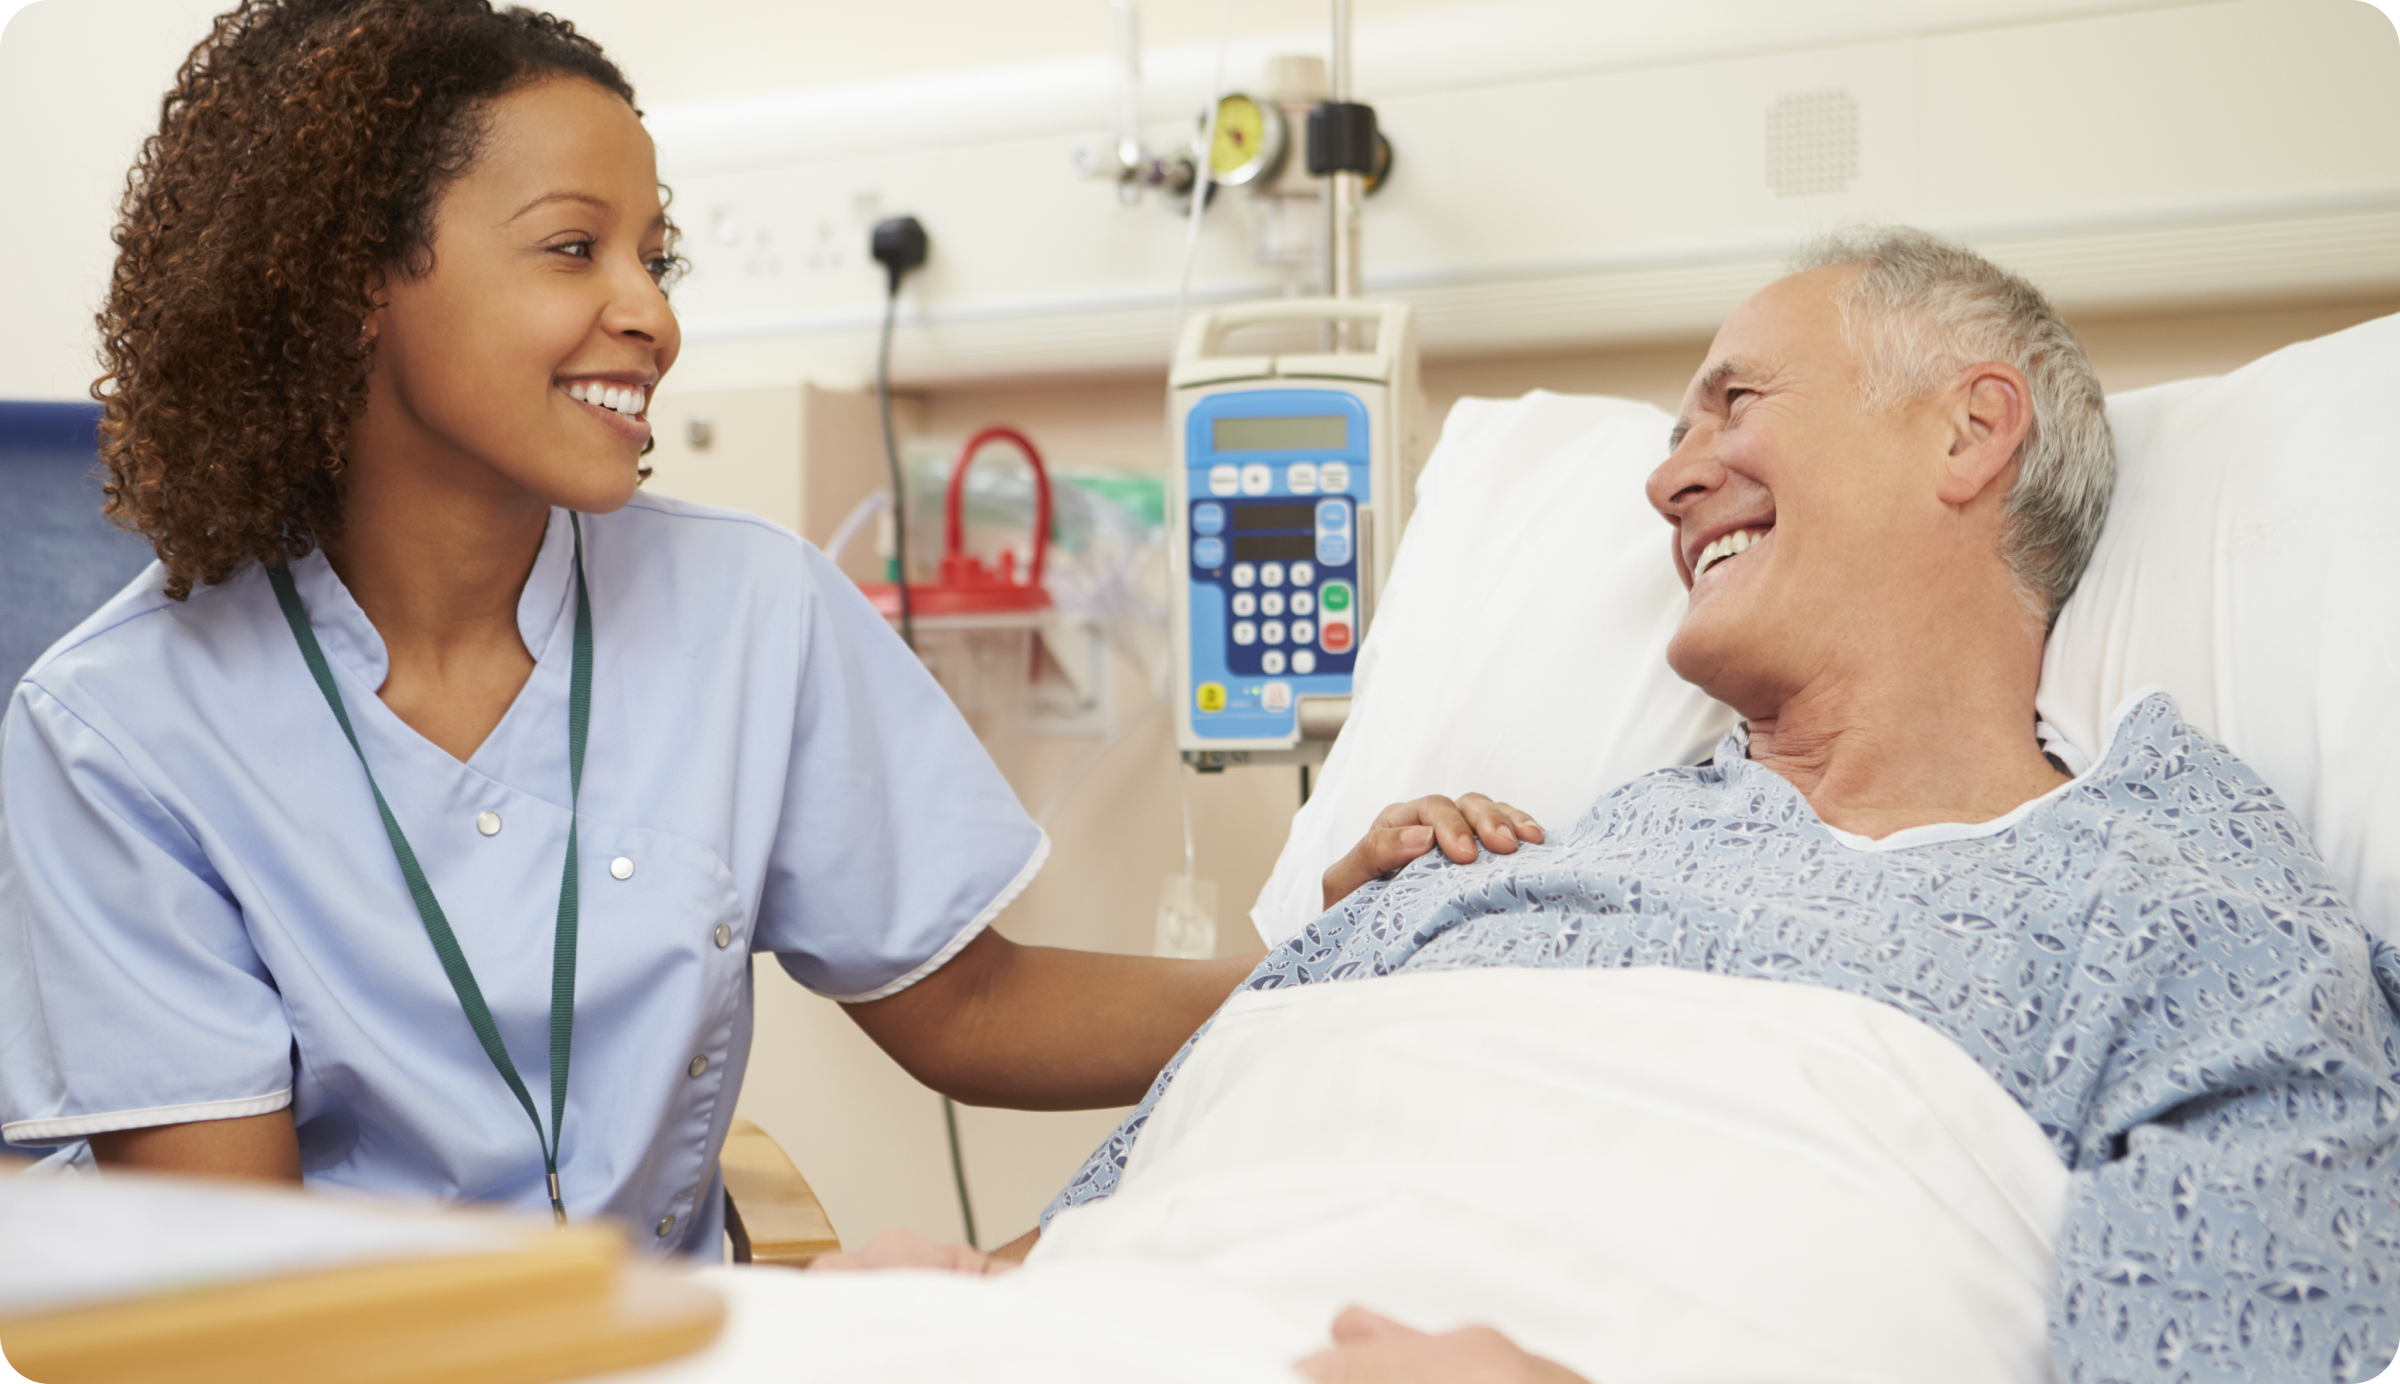 5 Keys to Outstanding Patient Education & Nurse-Patient Relationships